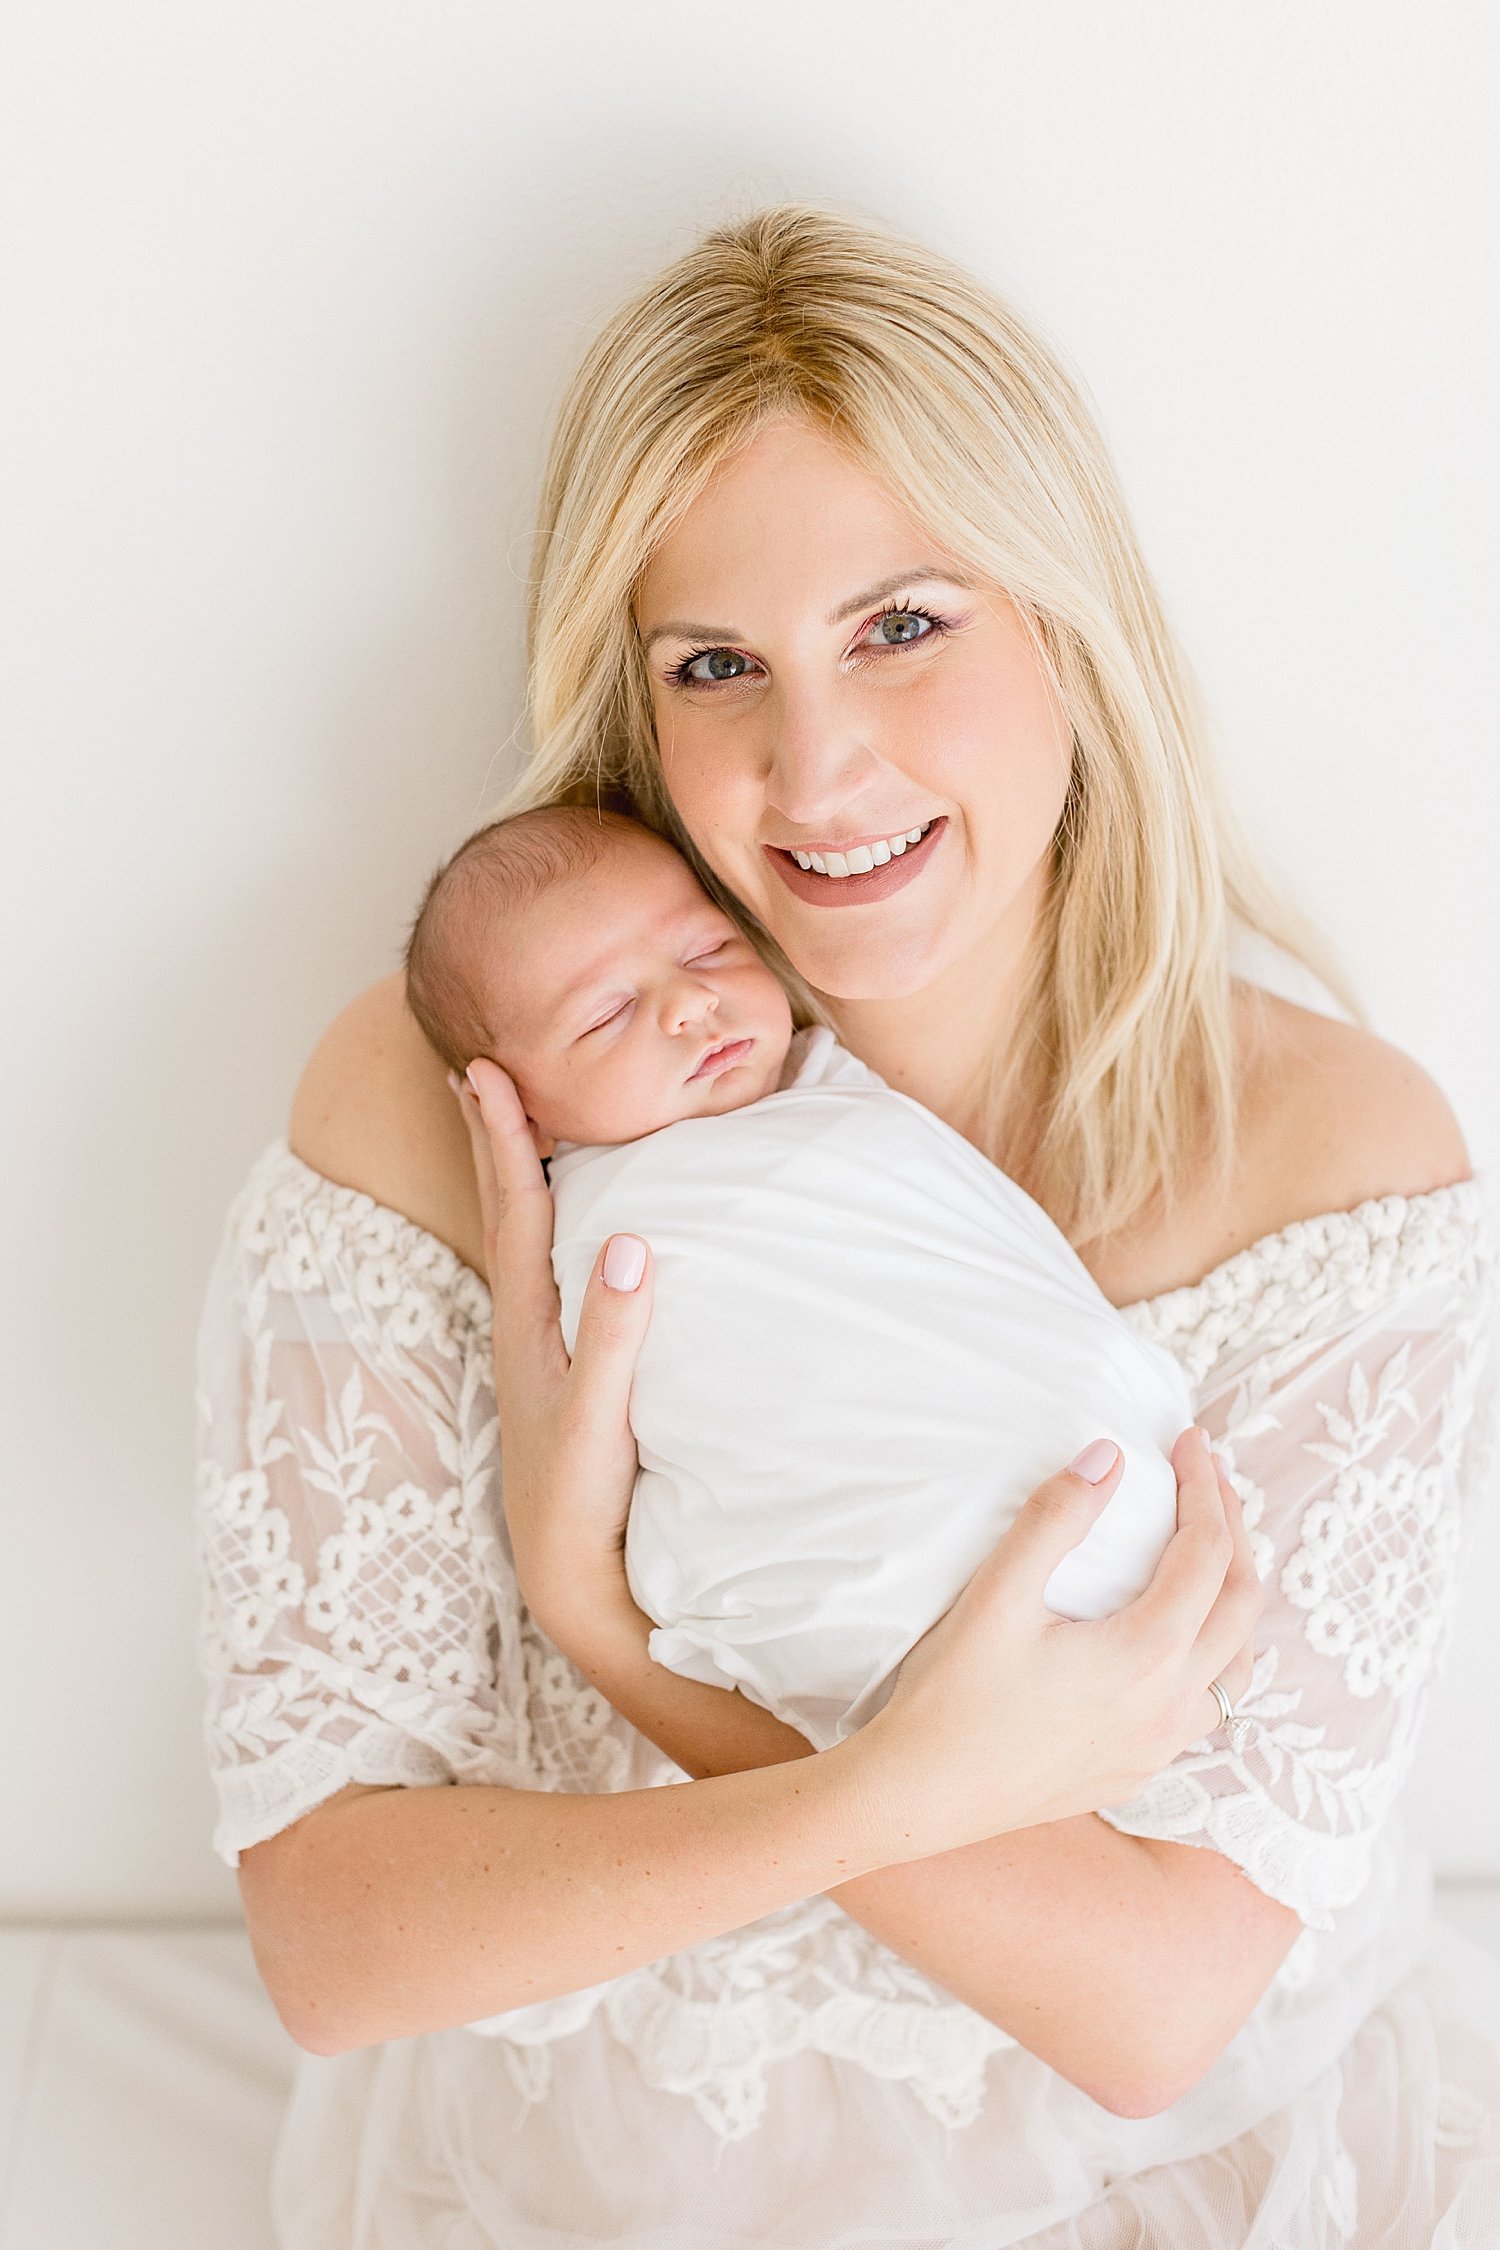 Mom with newborn son | Ambre Williams Photography